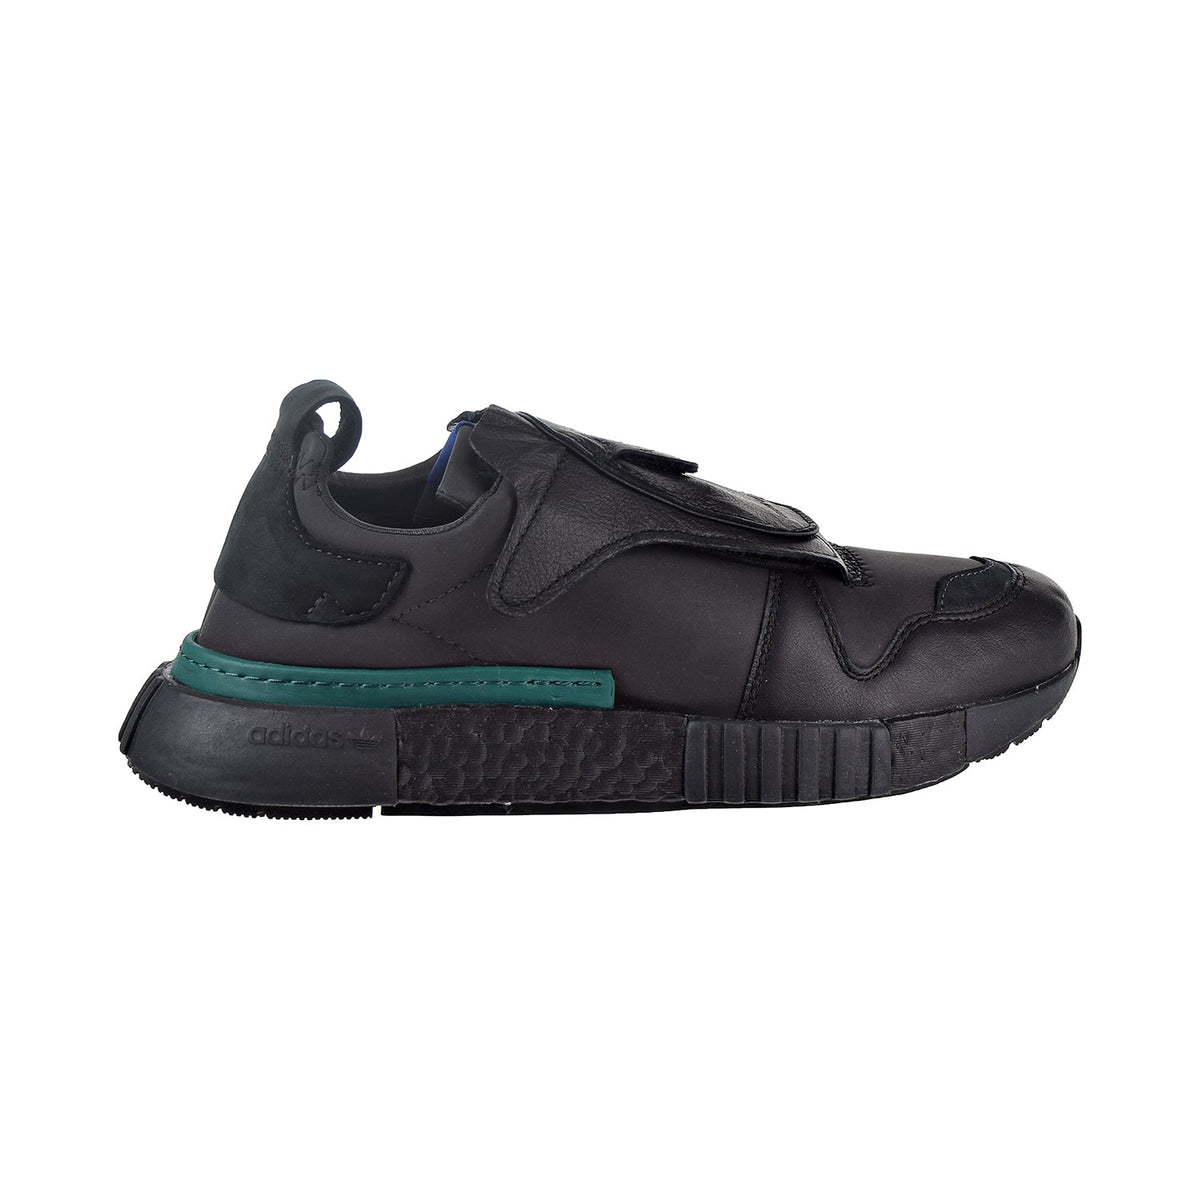 Adidas Futurepacer Men's Shoes Black/Carbon/White Sports NY